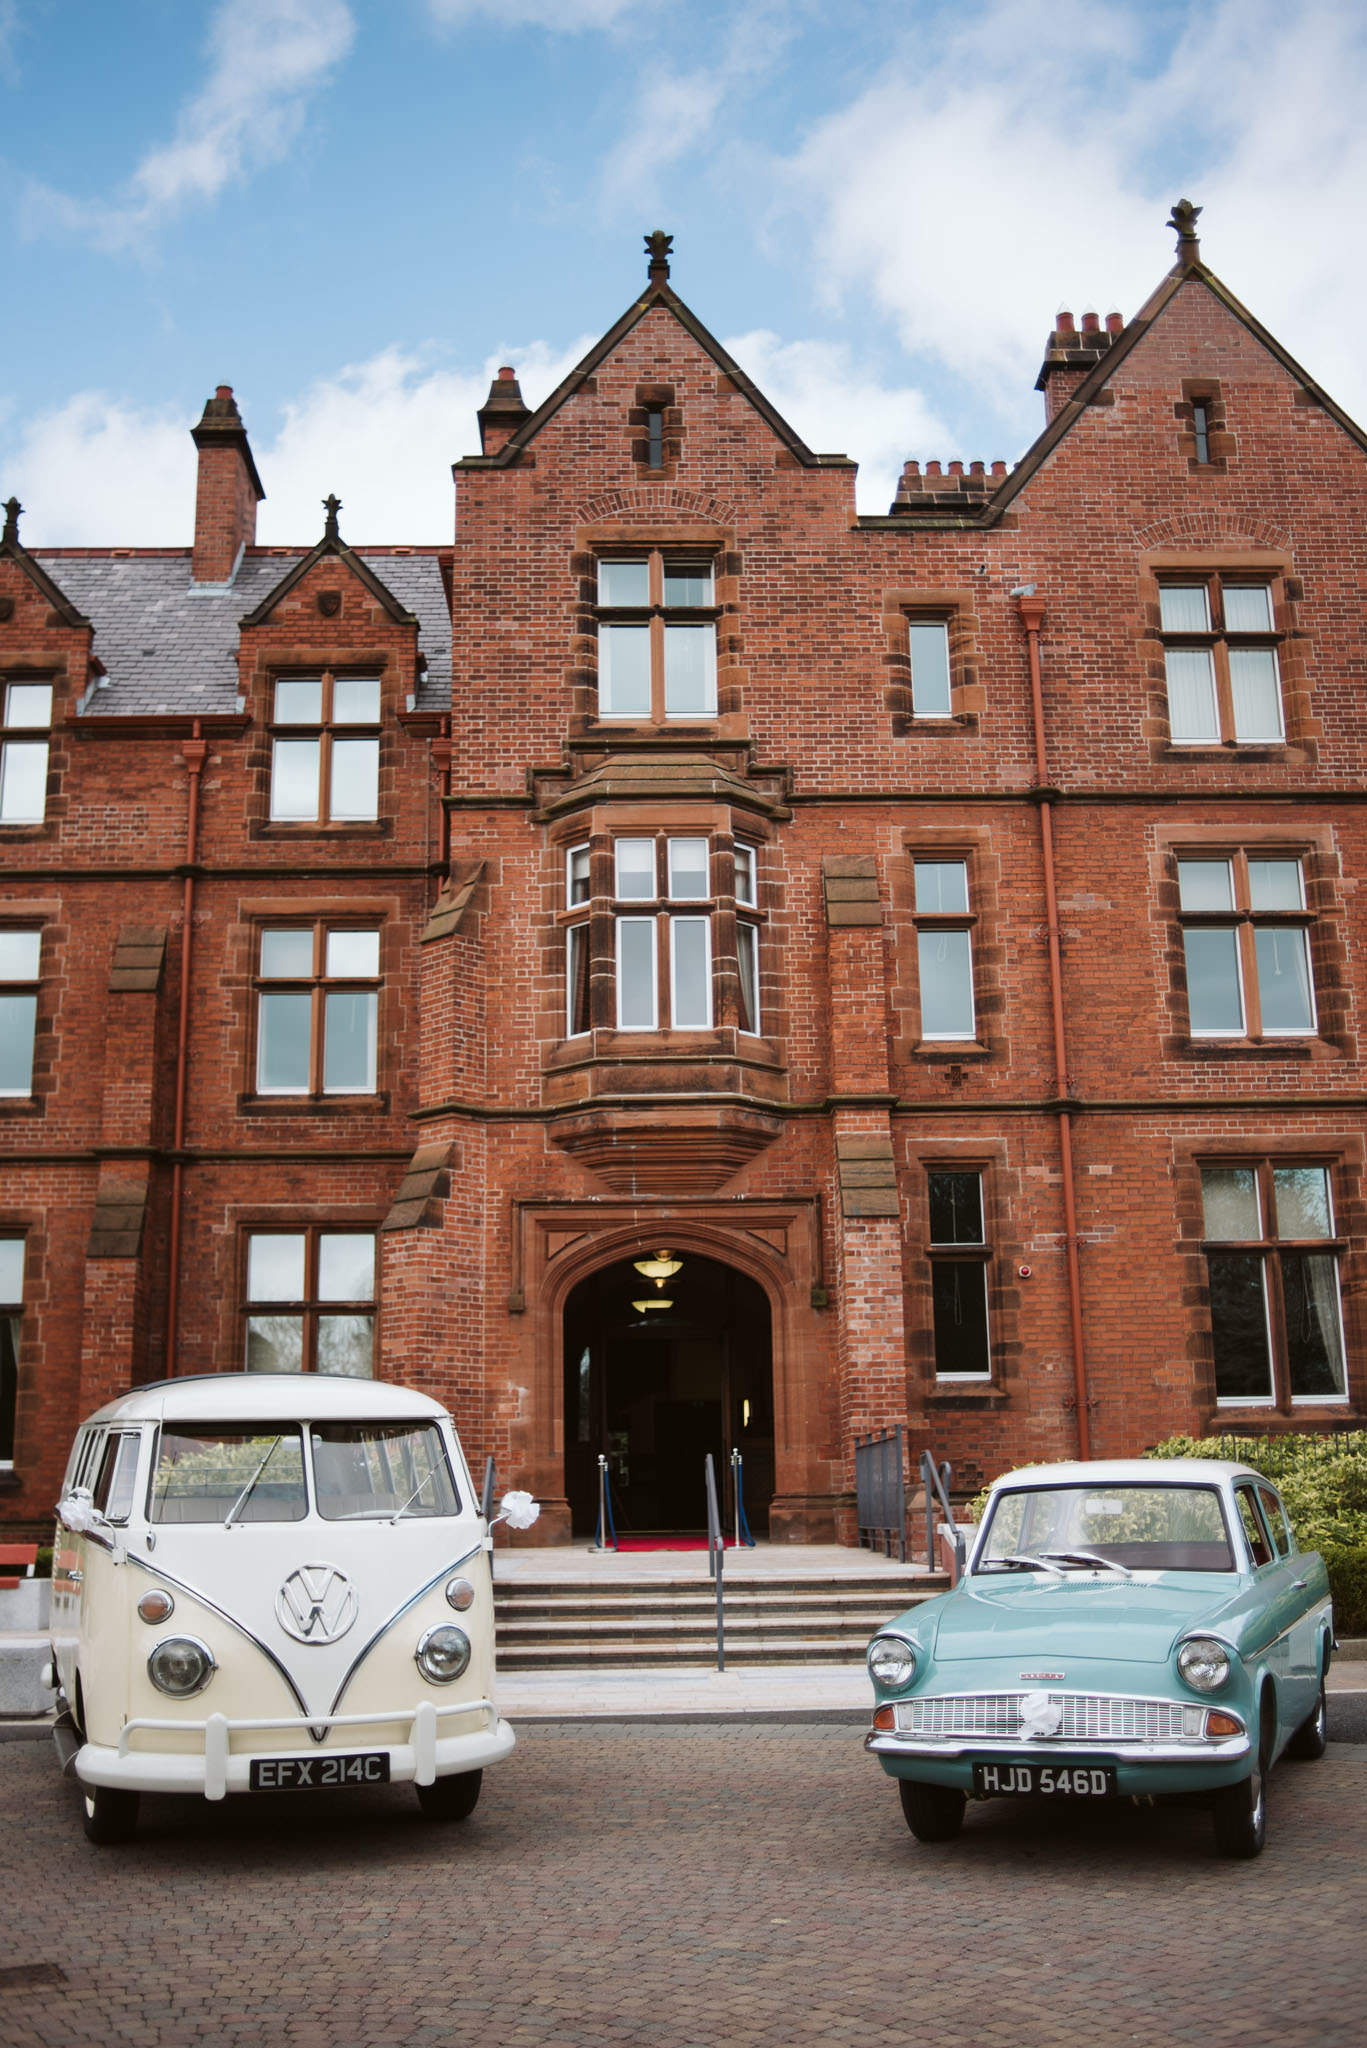 Harry Potter Themed Wedding, Riddel Hall, Great Hall, Hogwarts, Queens University Belfast, Northern Ireland